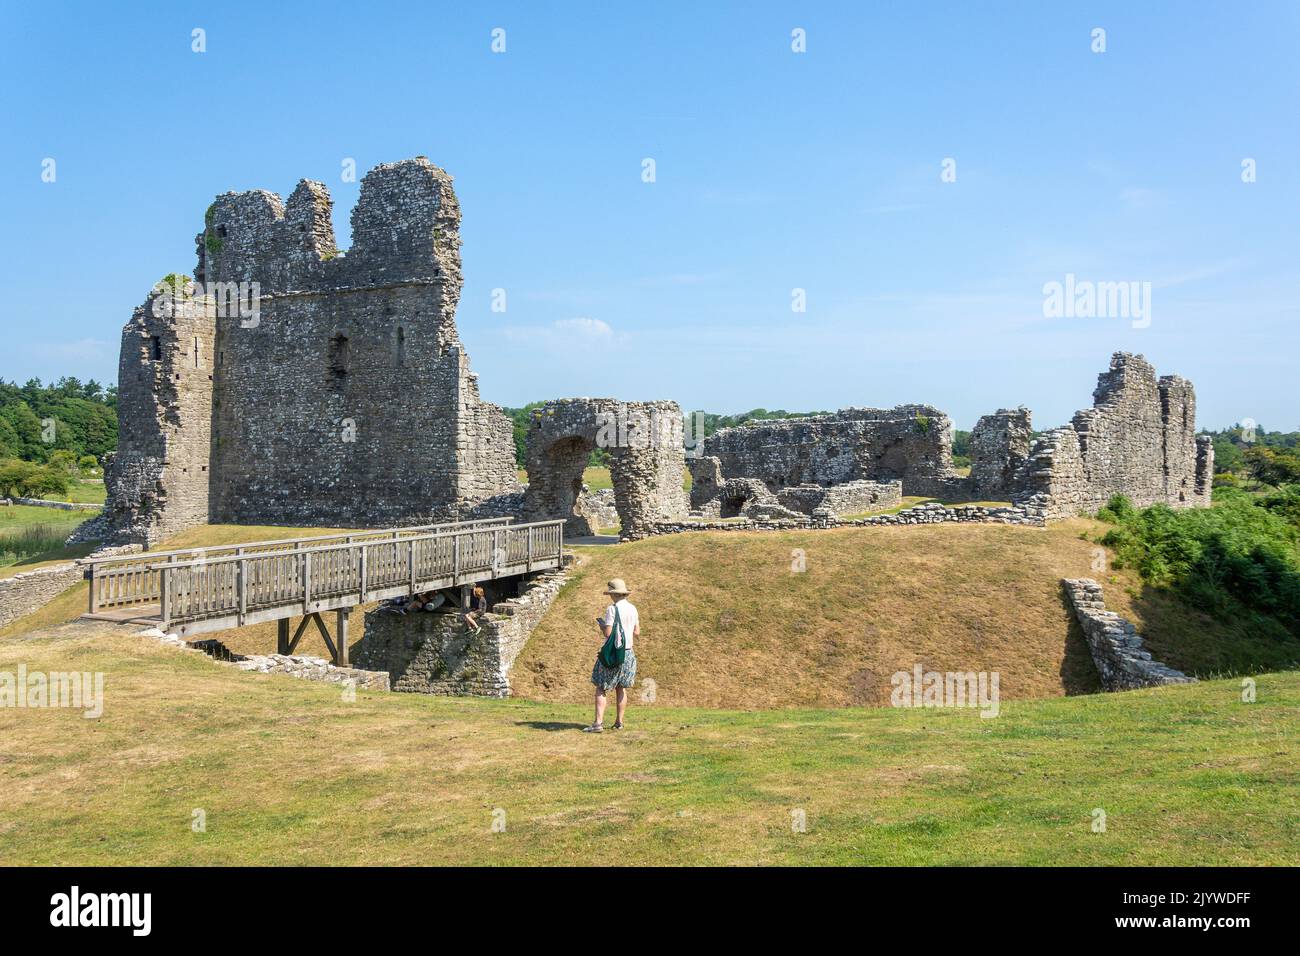 Ruins of Norman stone castle, Ogmore Castle, Ogmore, Vale of Glamorgan (Bro Morgannwg), Wales (Cymru), United Kingdom Stock Photo